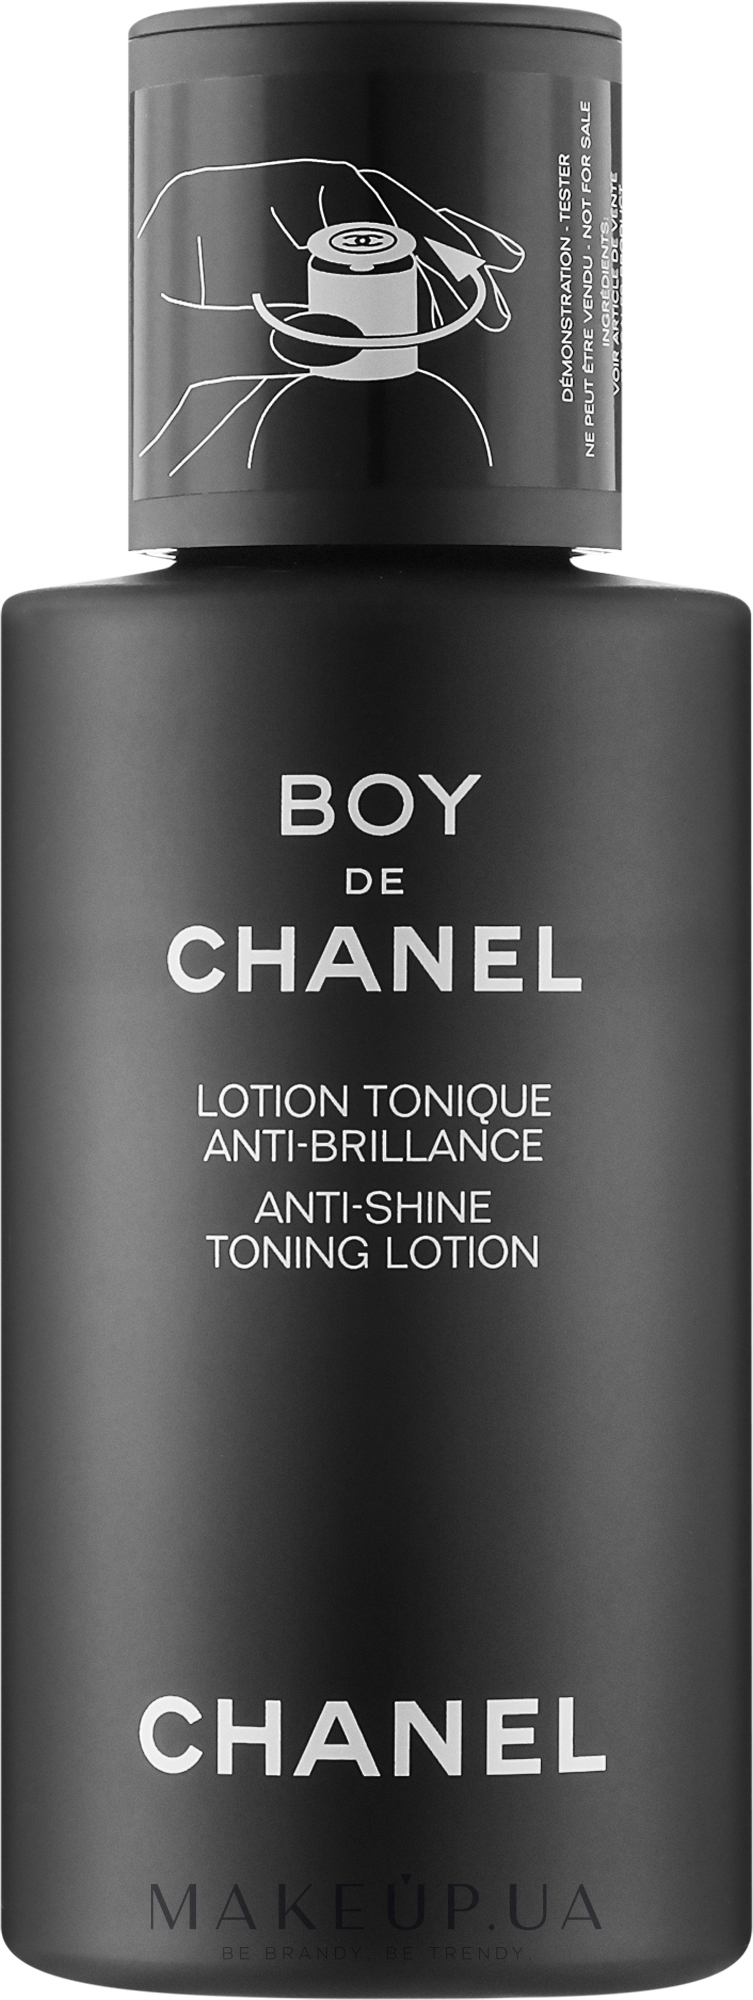 Boy de CHANEL - Makeup